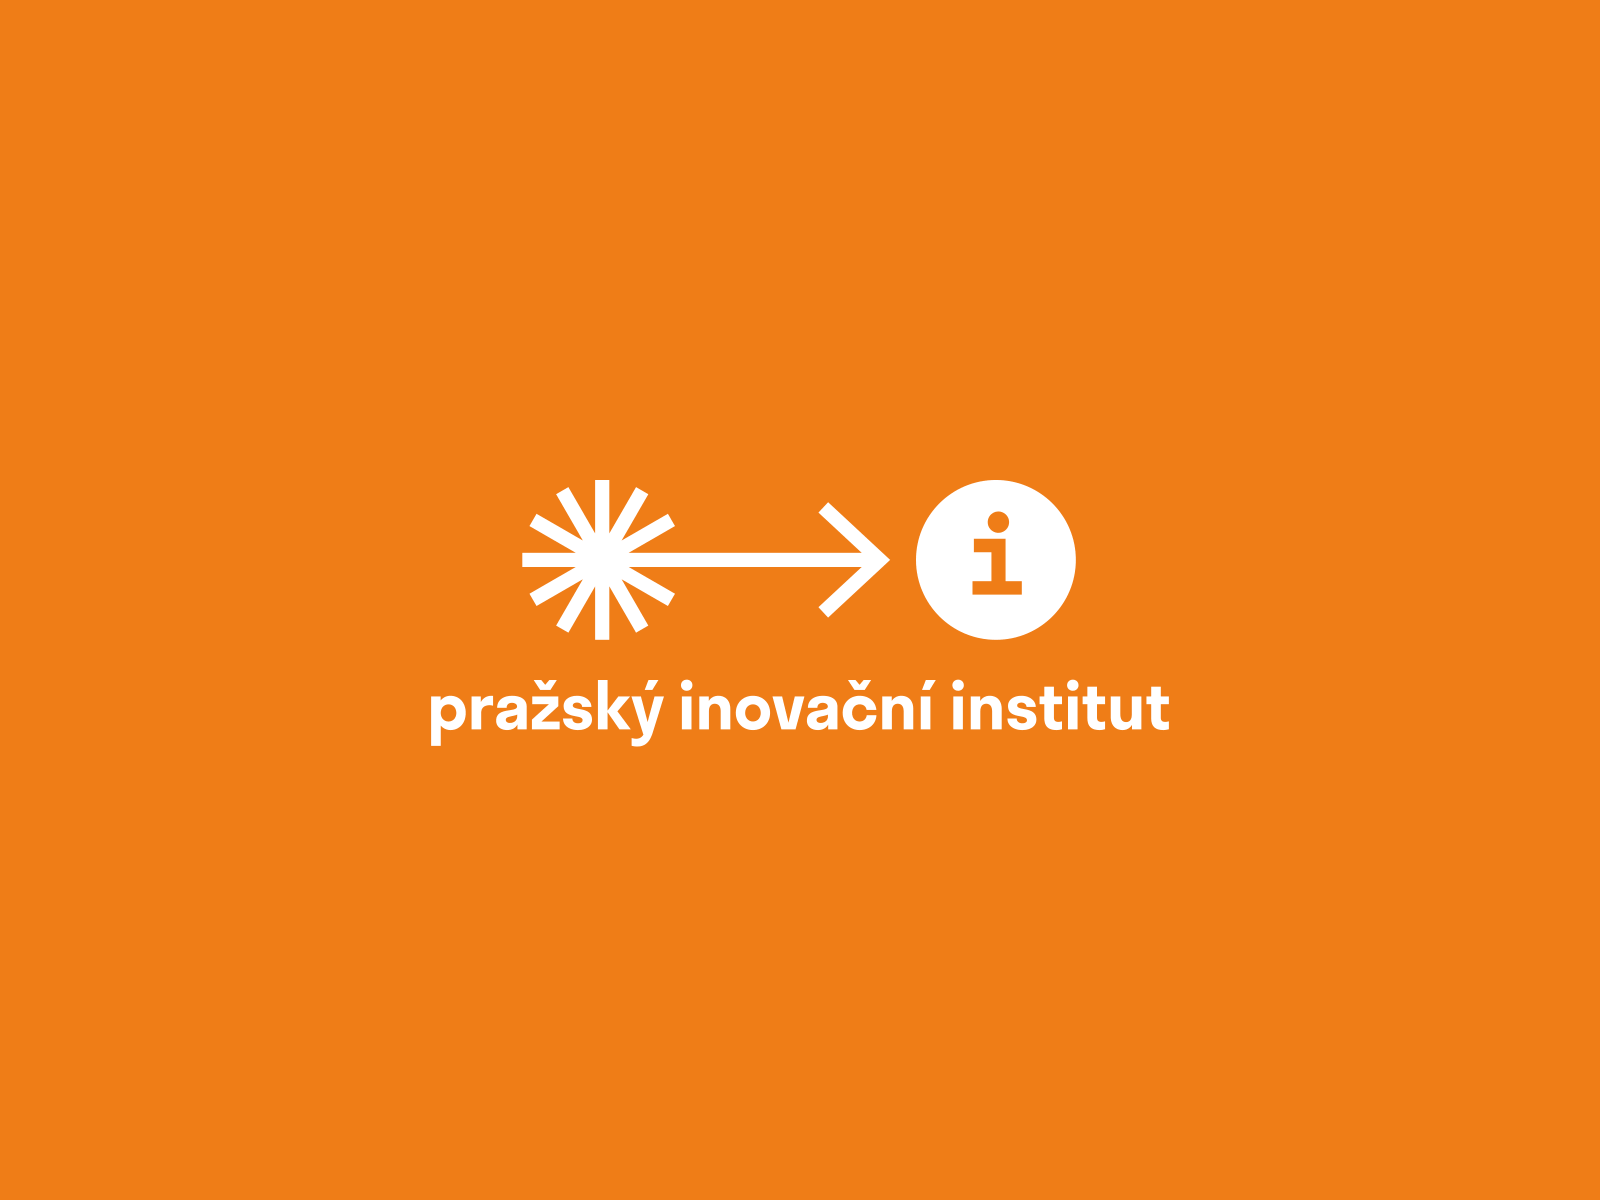 Prague Innovation Institute